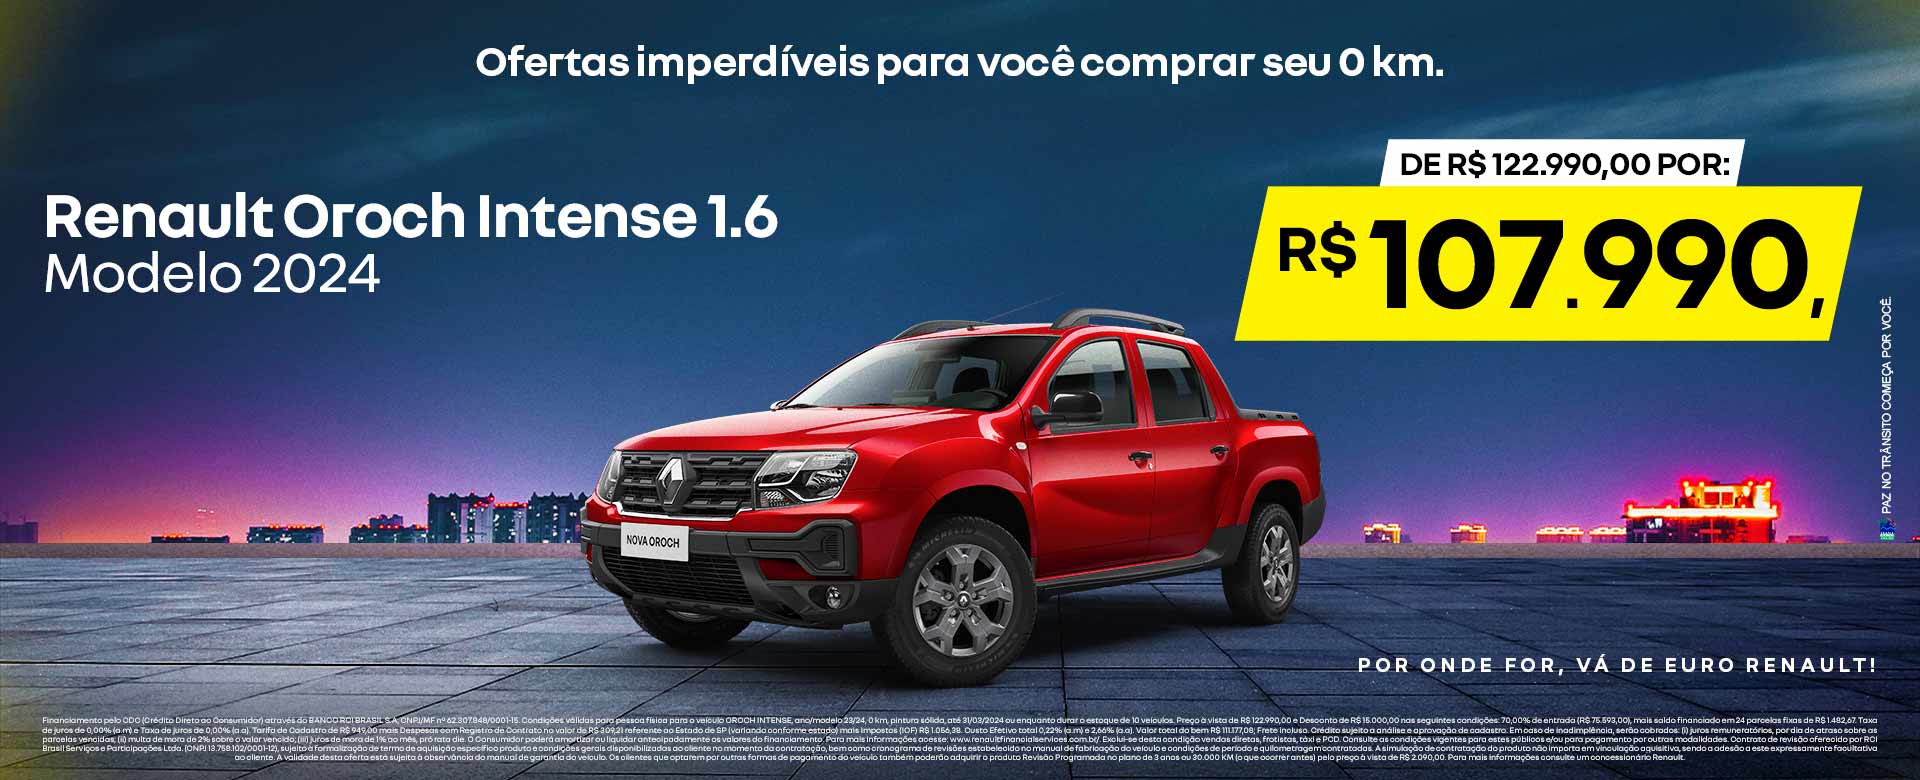 Oroch Intense 1.6 modelo 2024 - Por R$107.990,00 - Ribeirão Preto